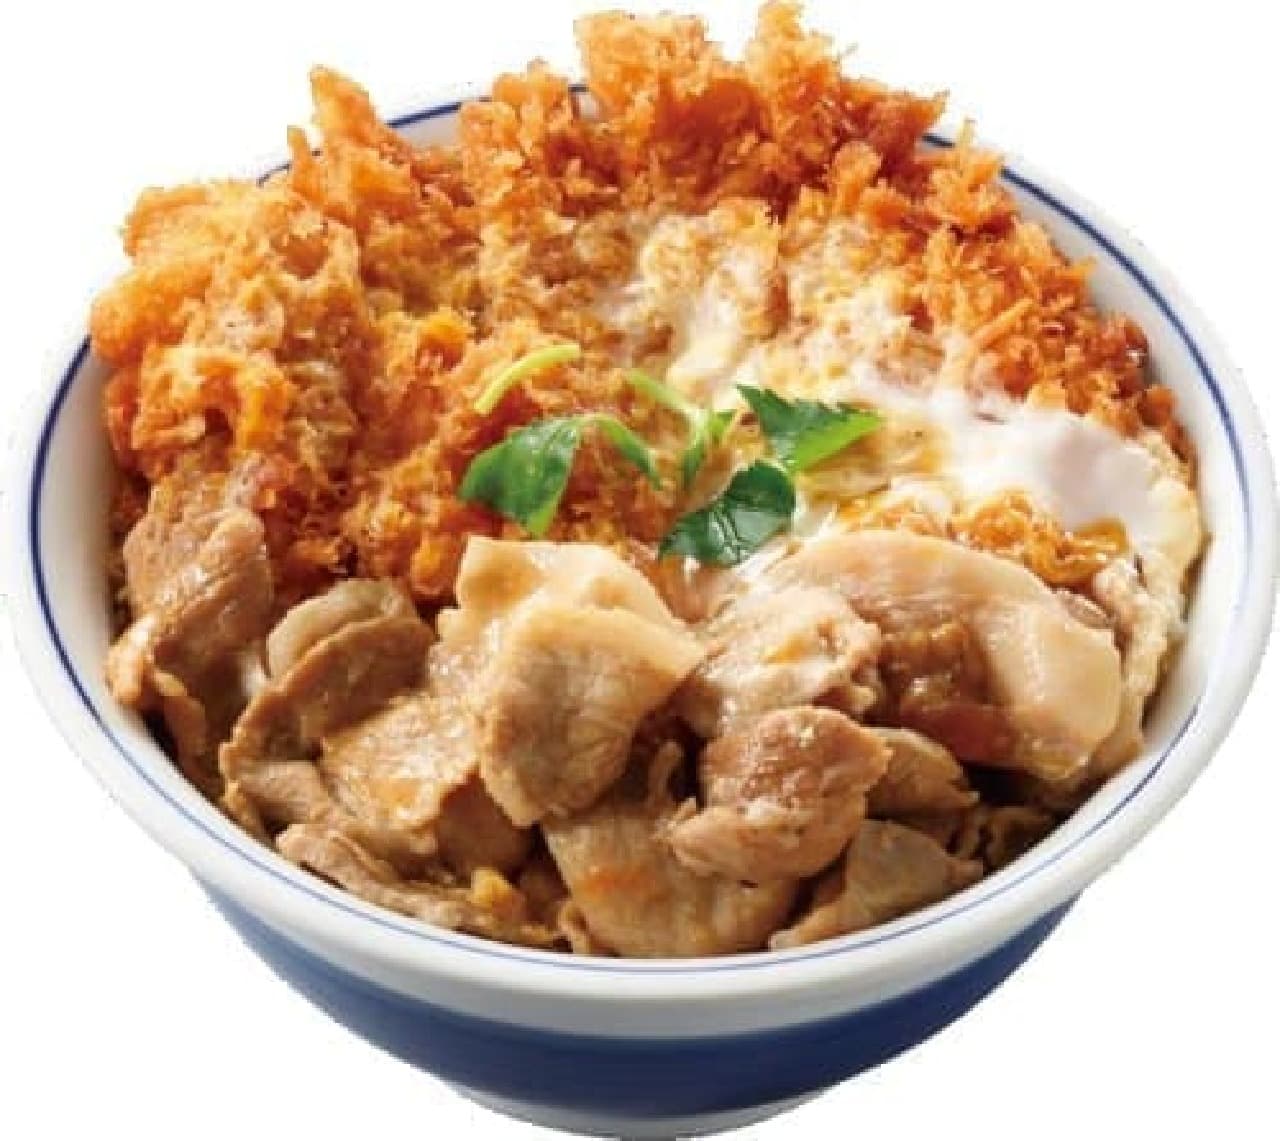 Katsuya "Pig rose chicken cutlet bowl"